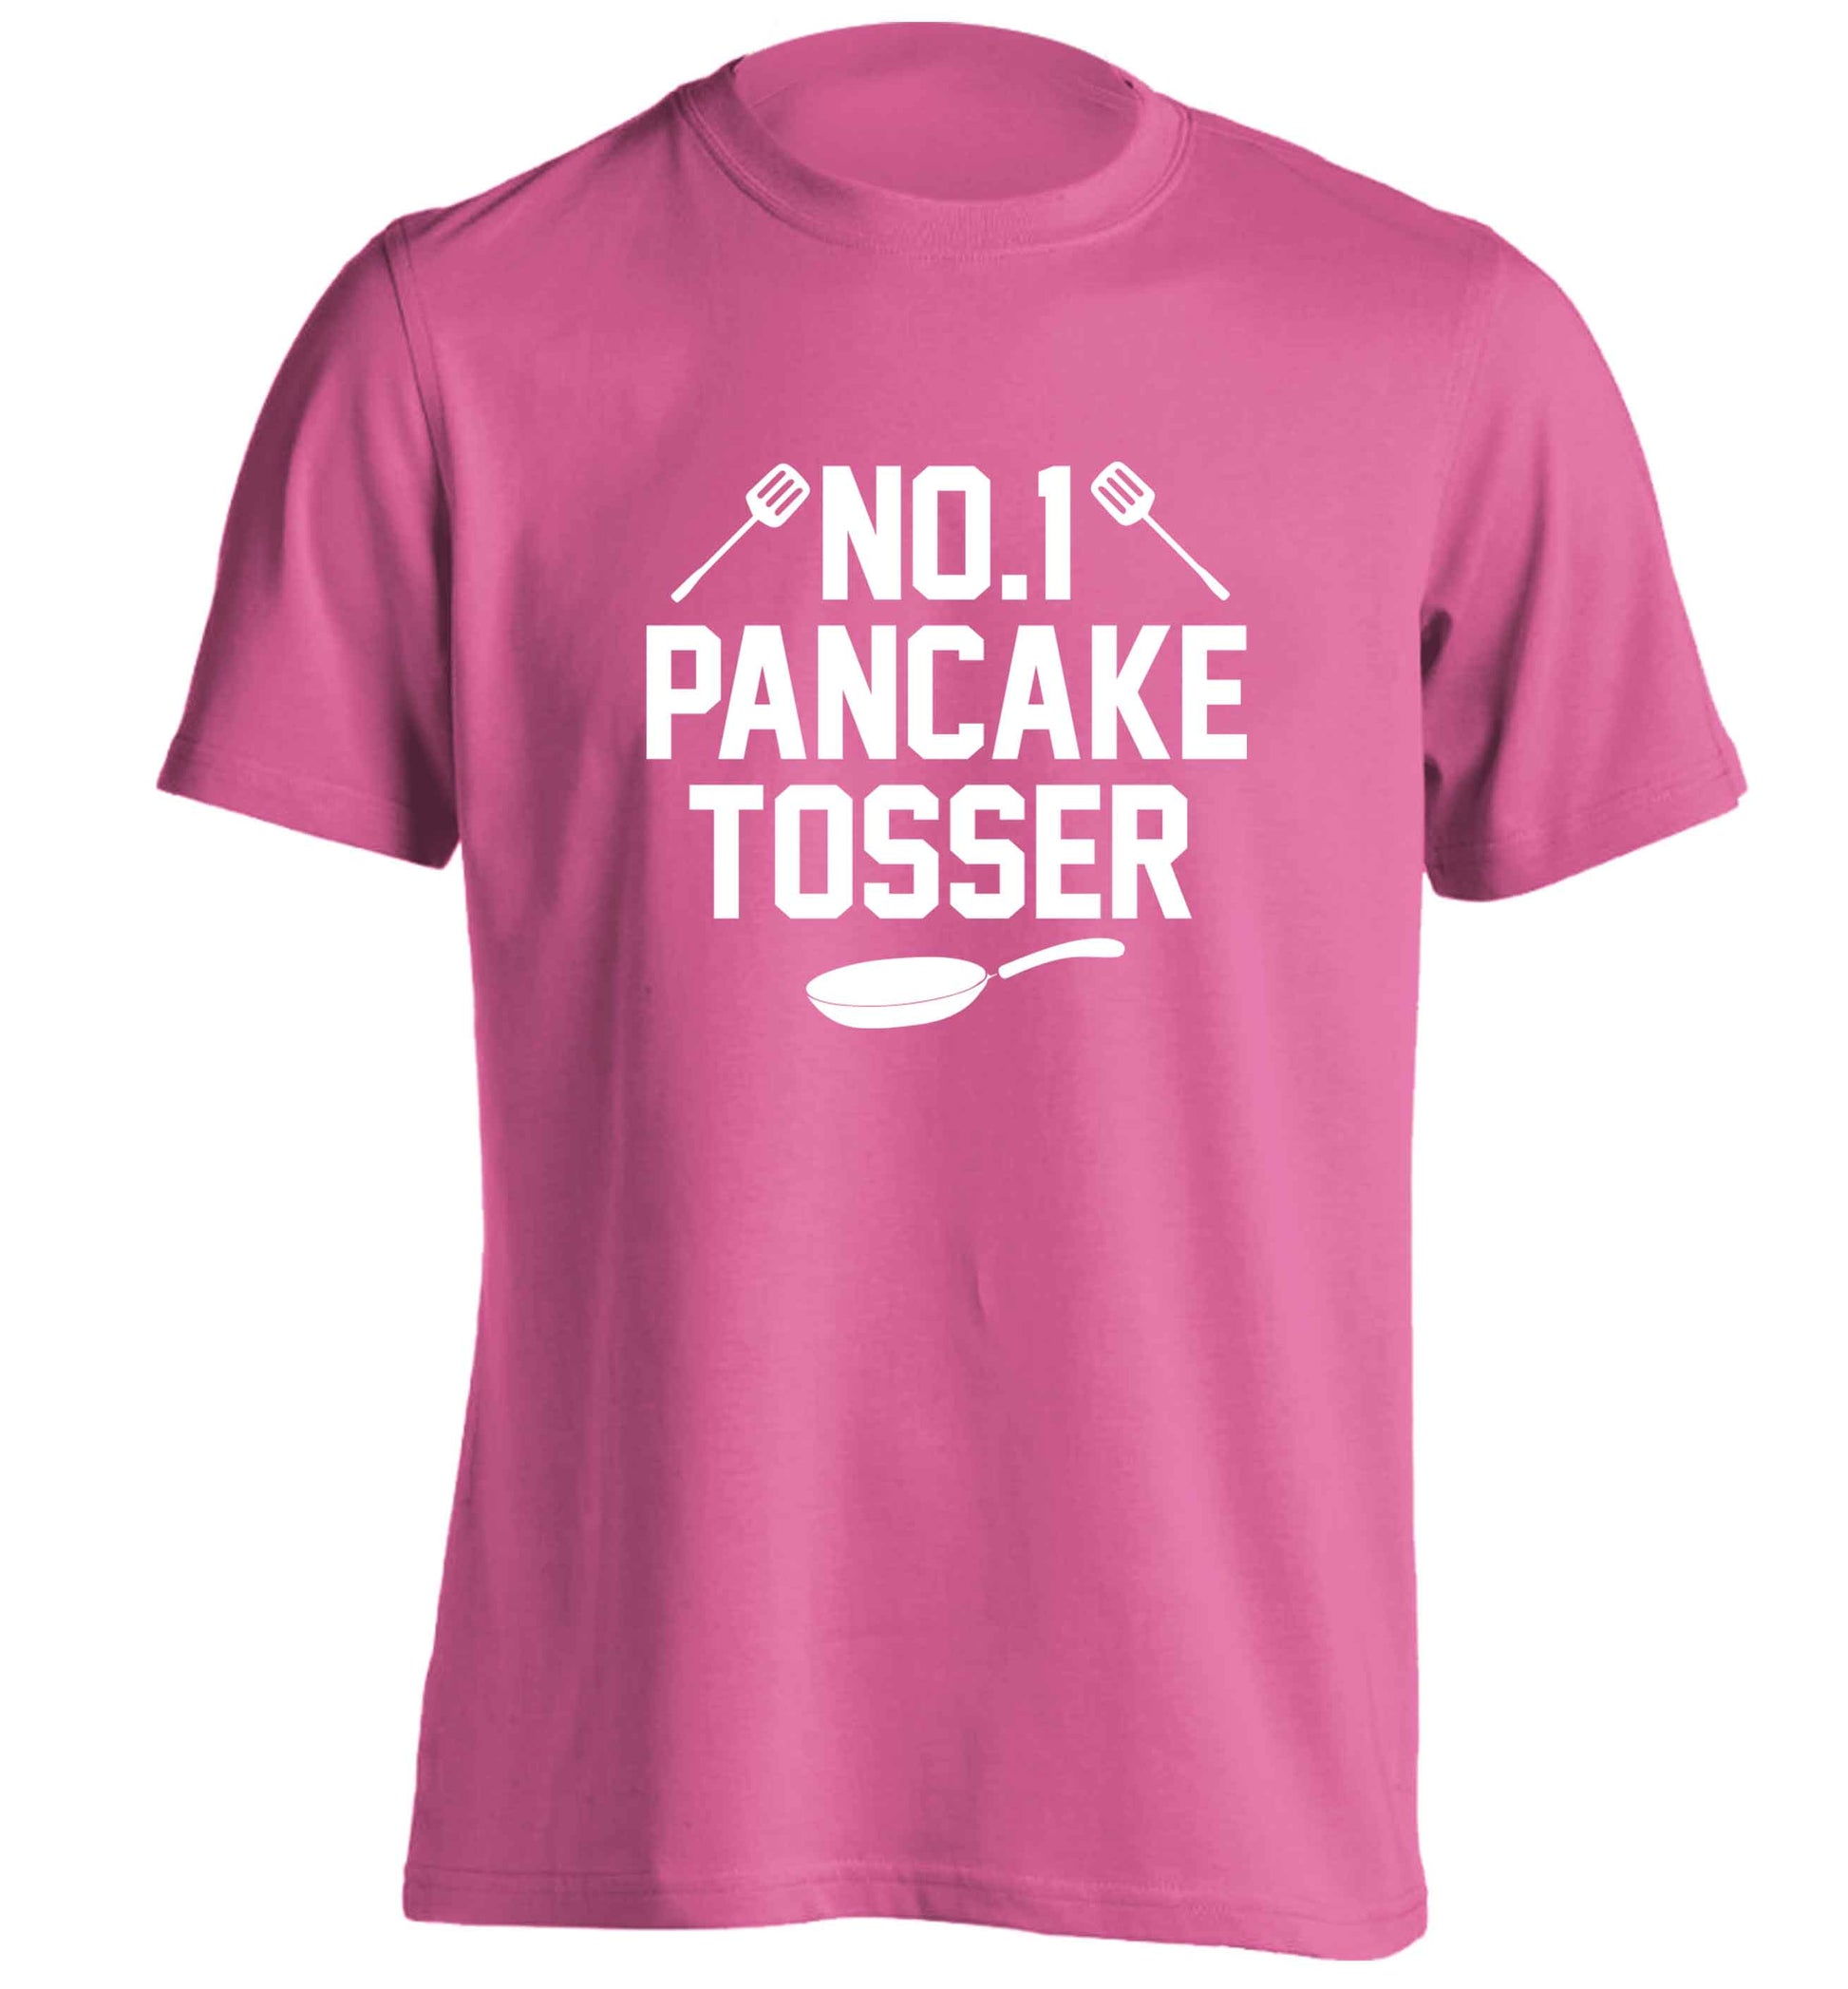 No.1 Pancake tosser adults unisex pink Tshirt 2XL